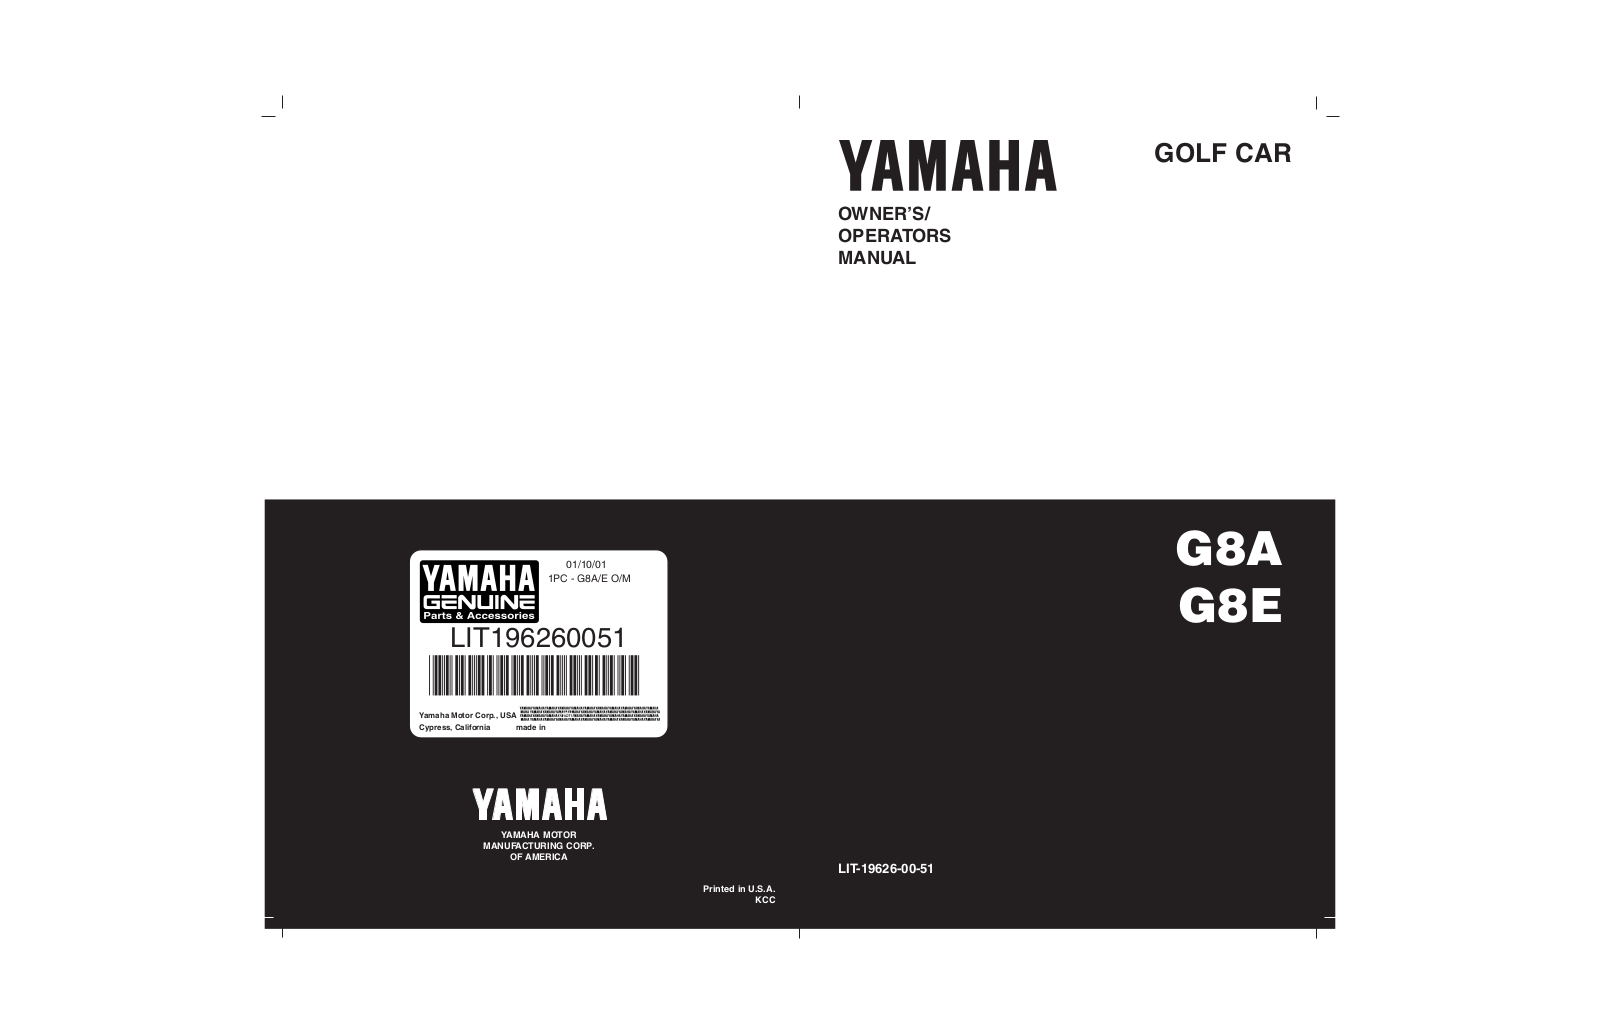 Yamaha G8A, G8E, FLEET CLASSIC 36 VOLT ELECTRIC-G8-EH-EJ-EK Manual